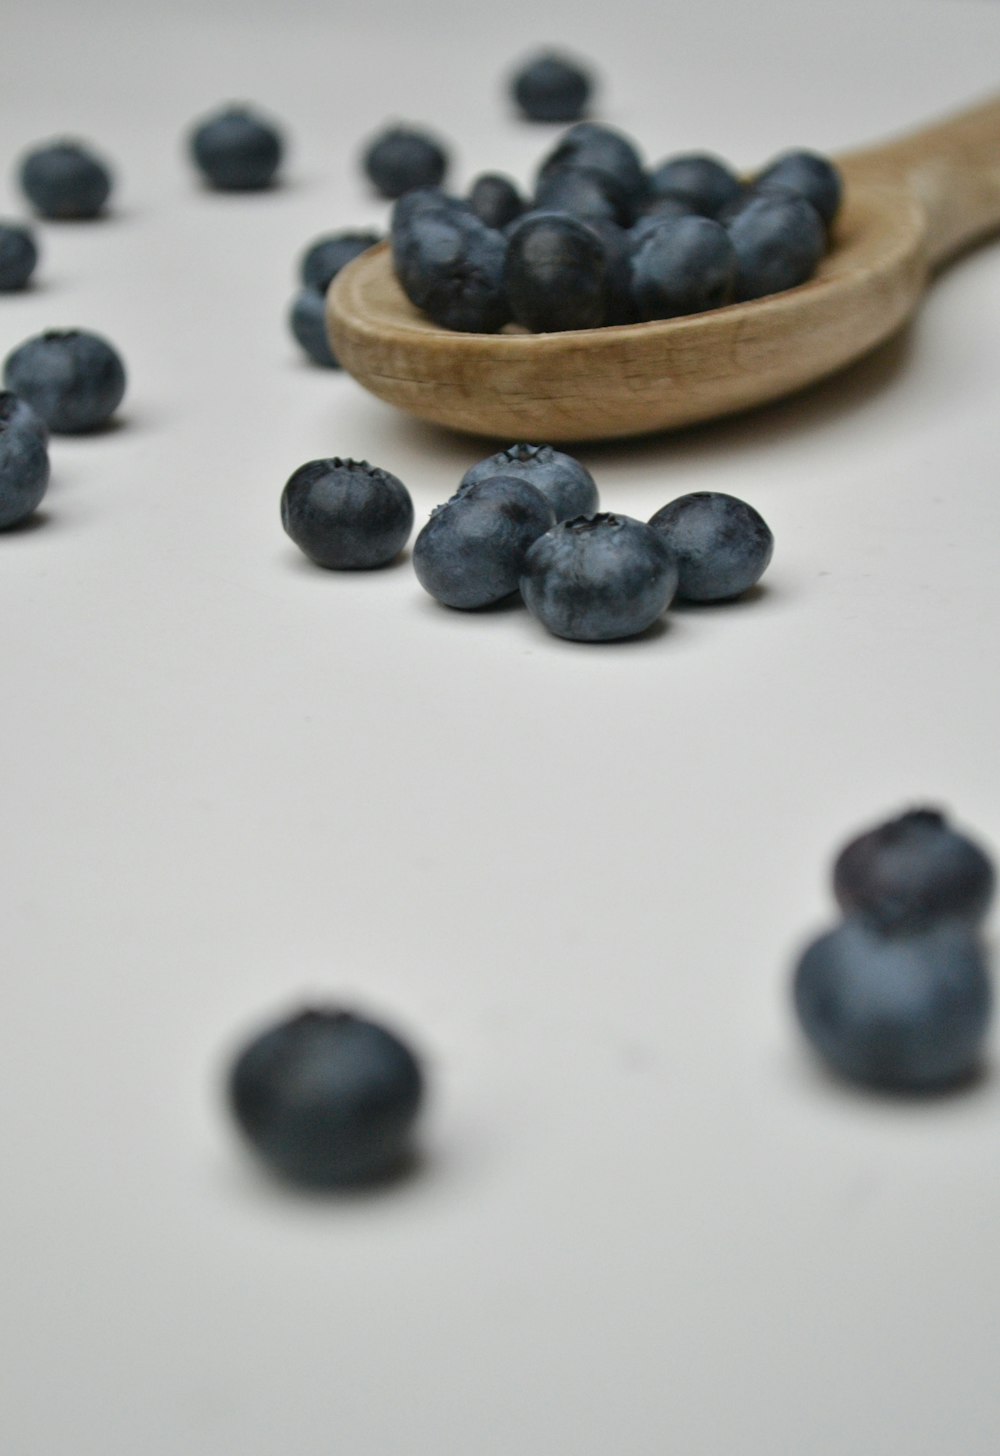 black round fruits on white table